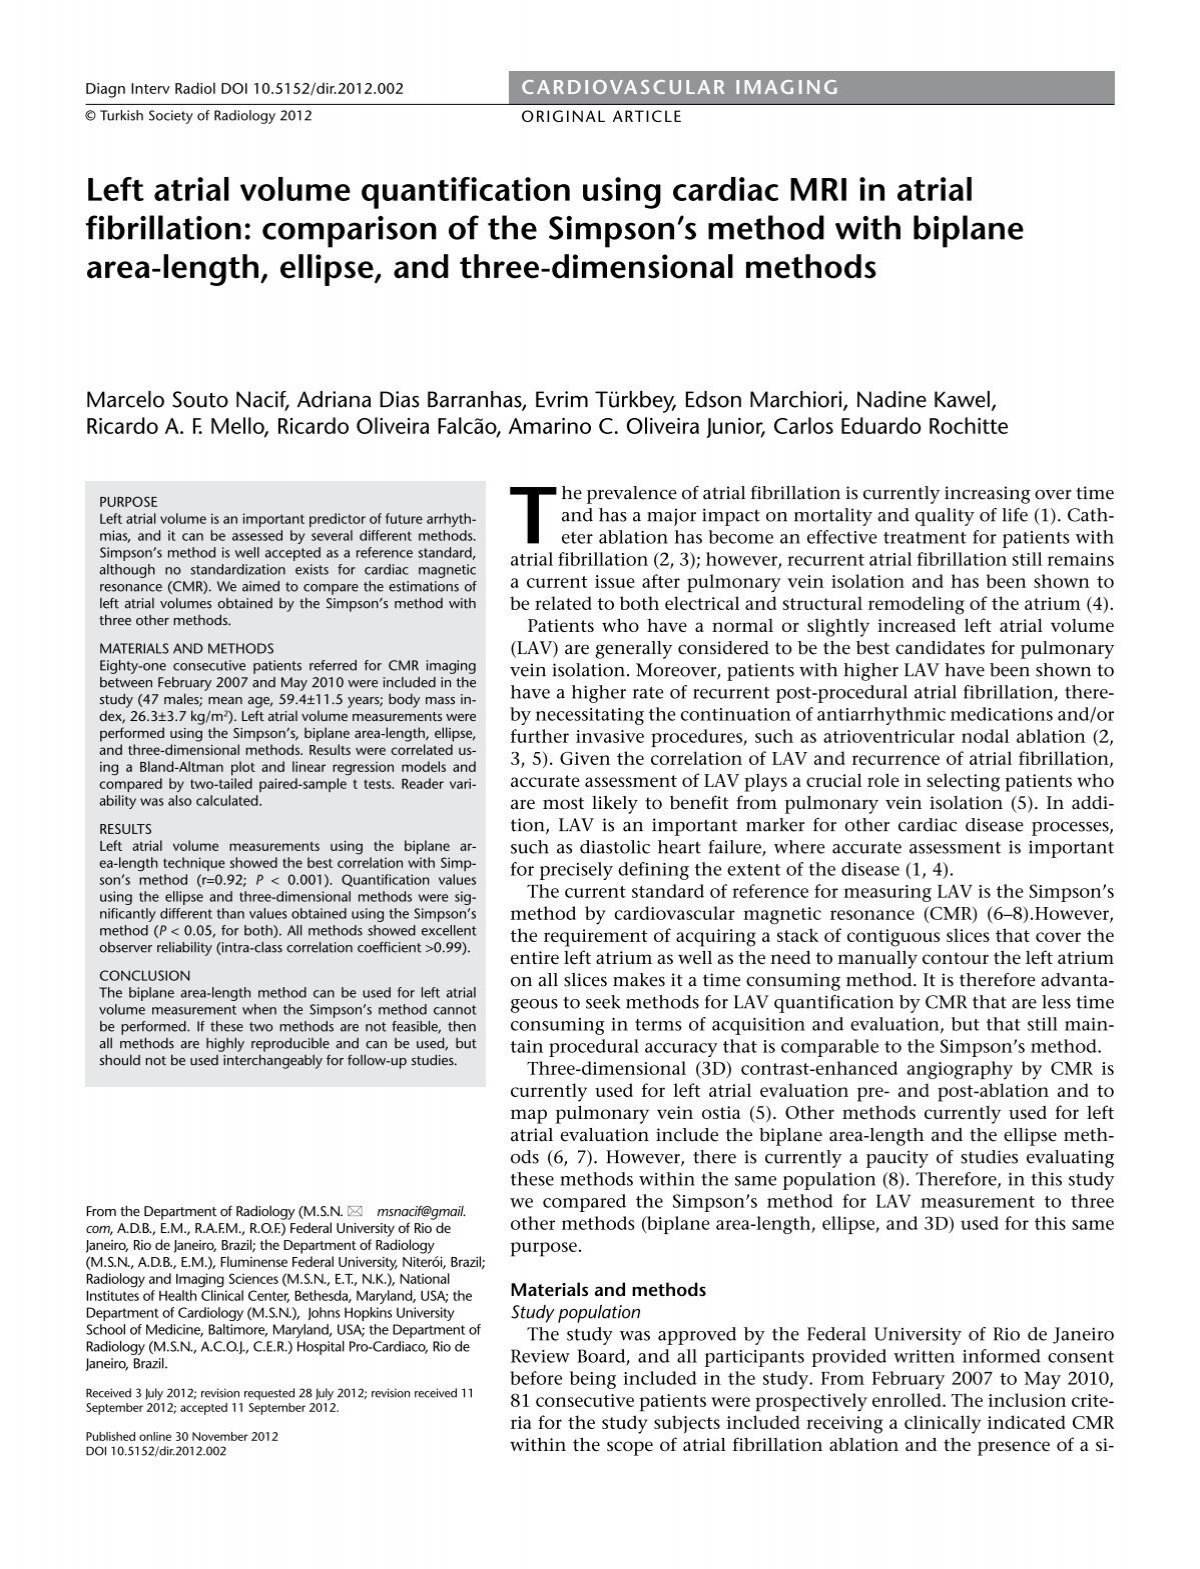 radiology dissertation pdf